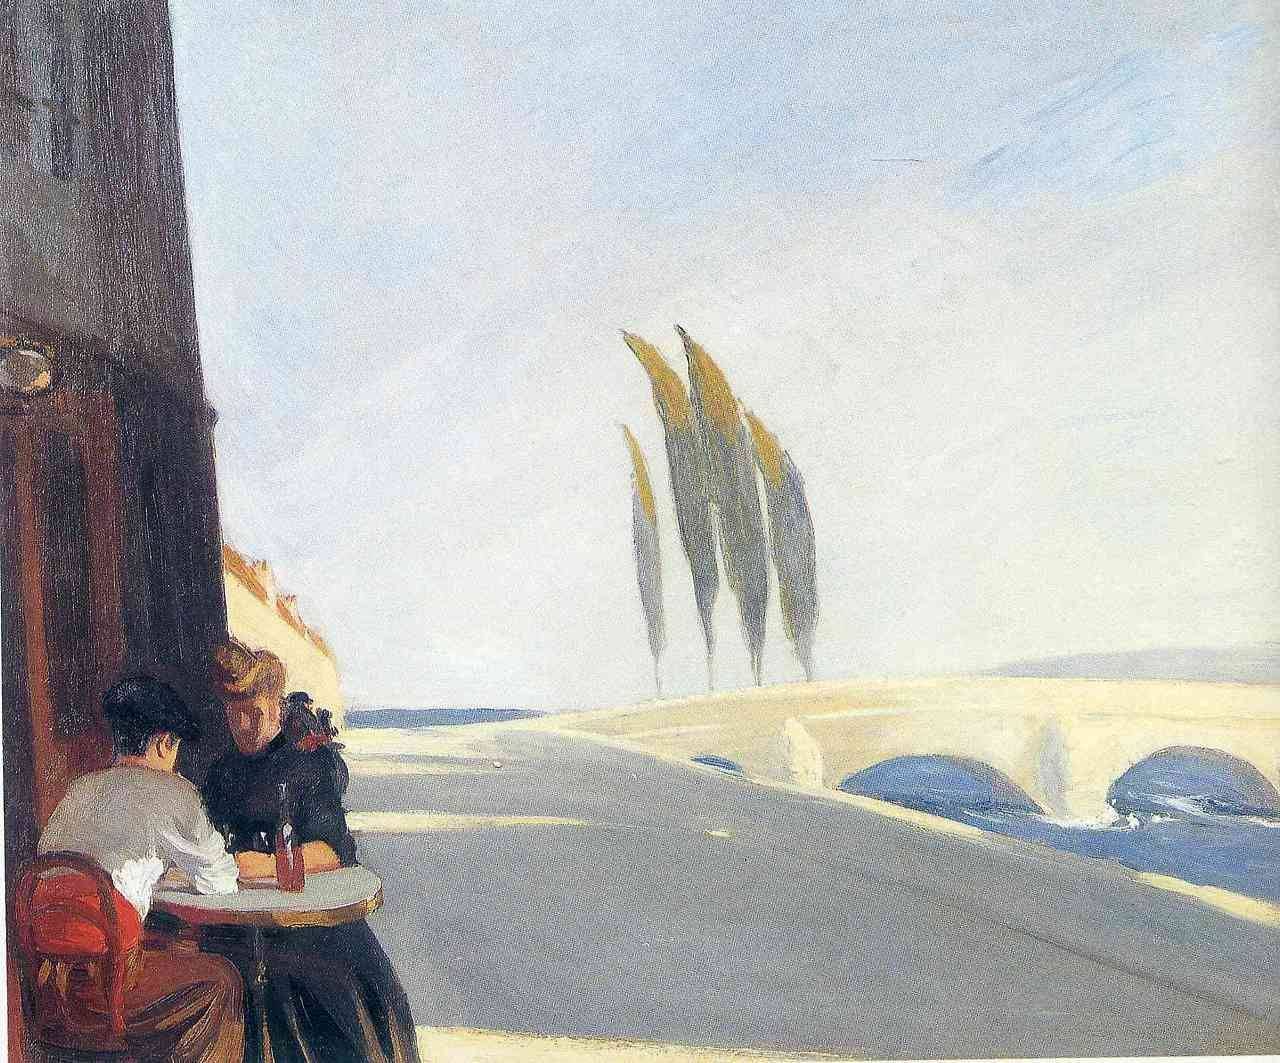 Le Bistro (Sklep z winem) by Edward Hopper - 1909 